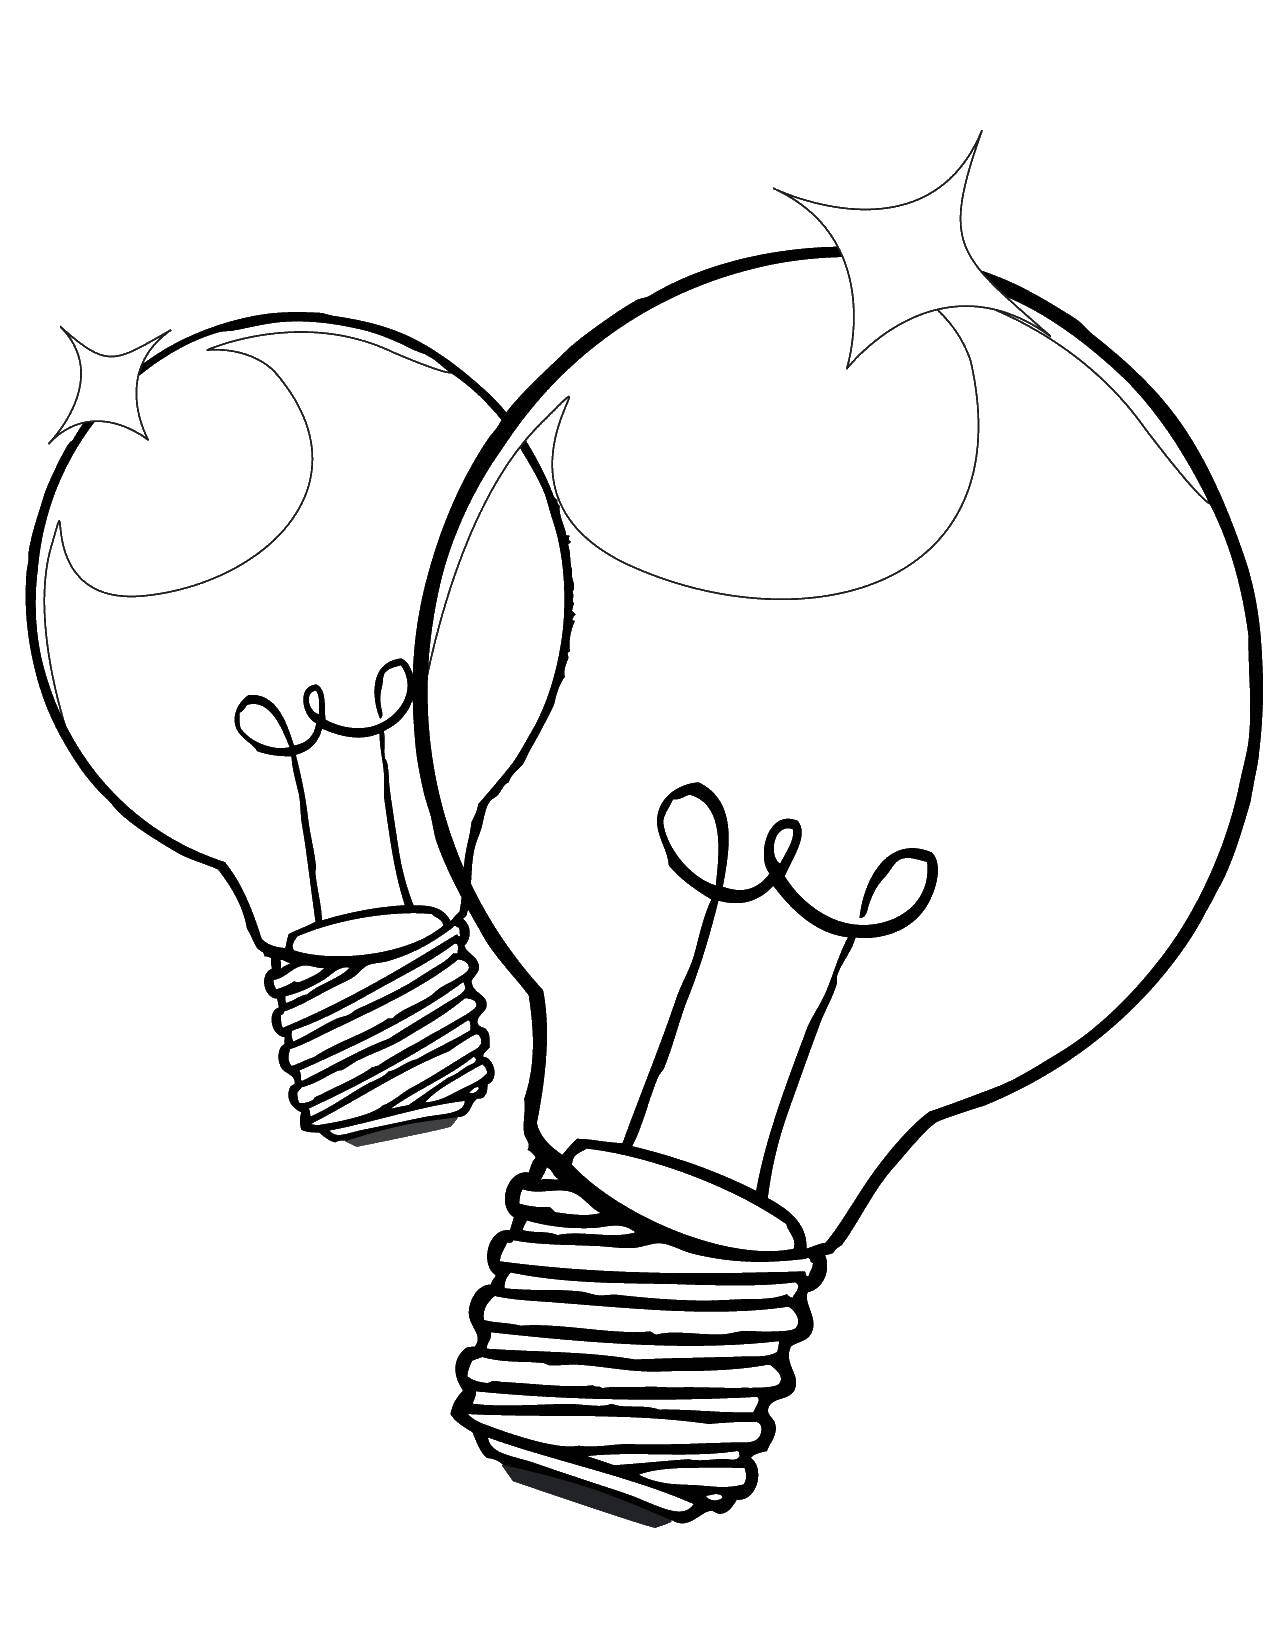 Coloring Light bulb. Category Lamp. Tags:  light, light bulbs.